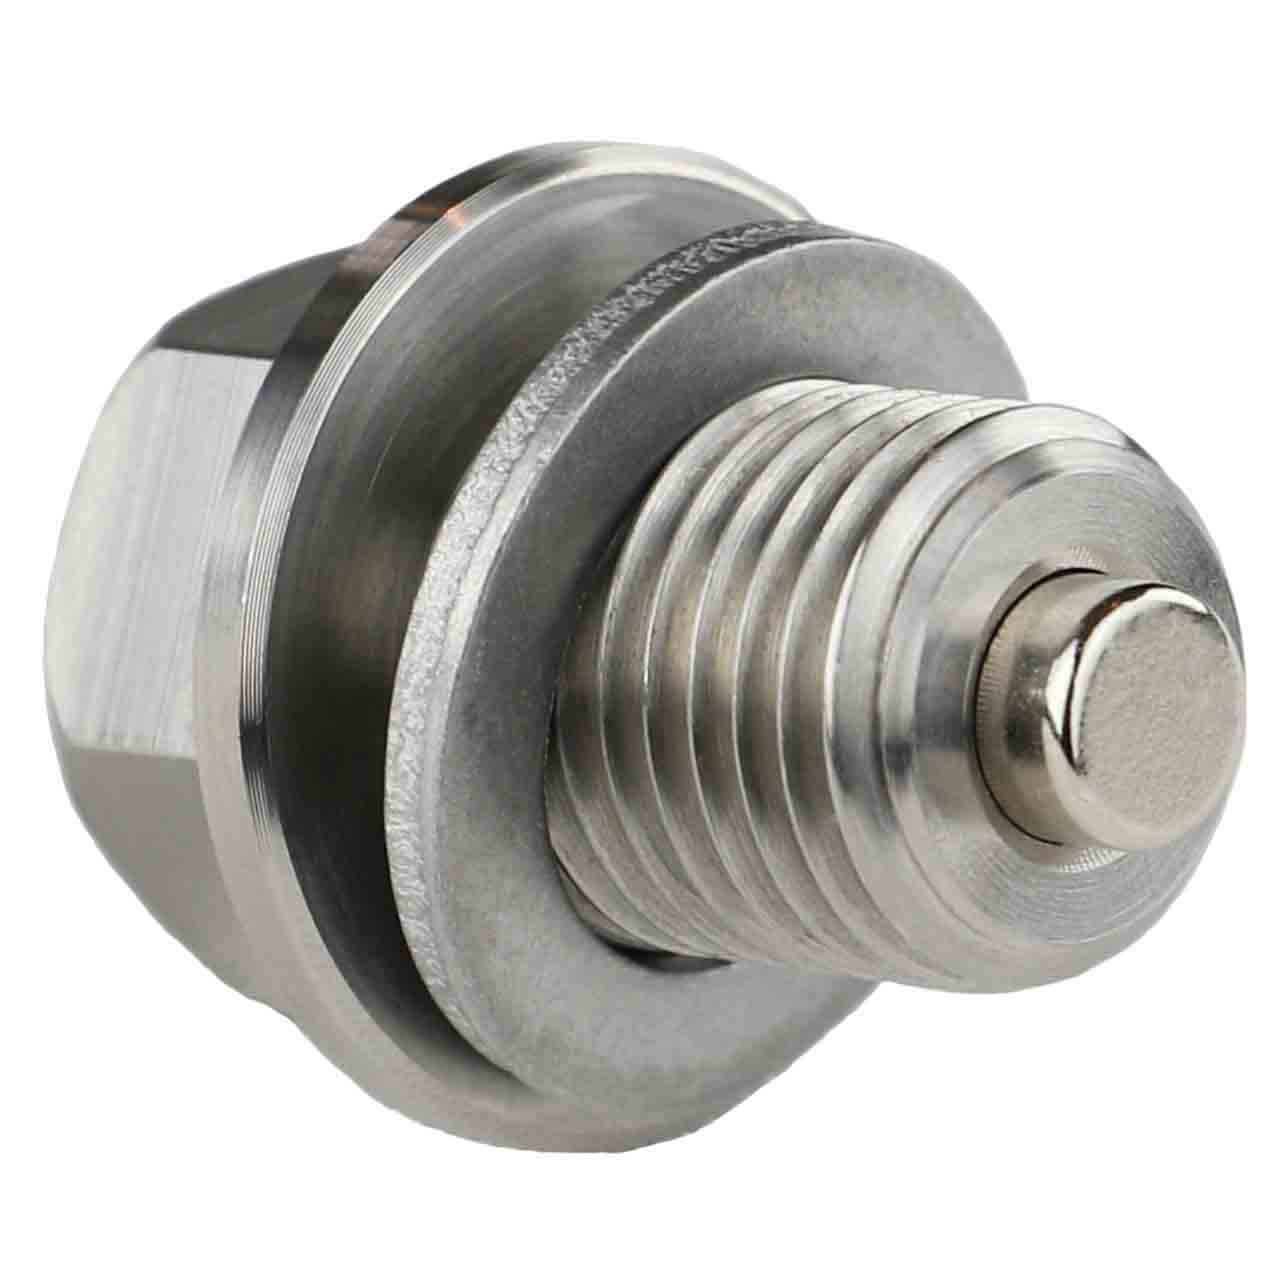 Suzuki Grand Vitara Magnetic Oil Drain Plug - 2009-2017 - 2.4 Liter - 4 Cylinder - Made In USA - Stainless Steel - Part Number 11518-63J01